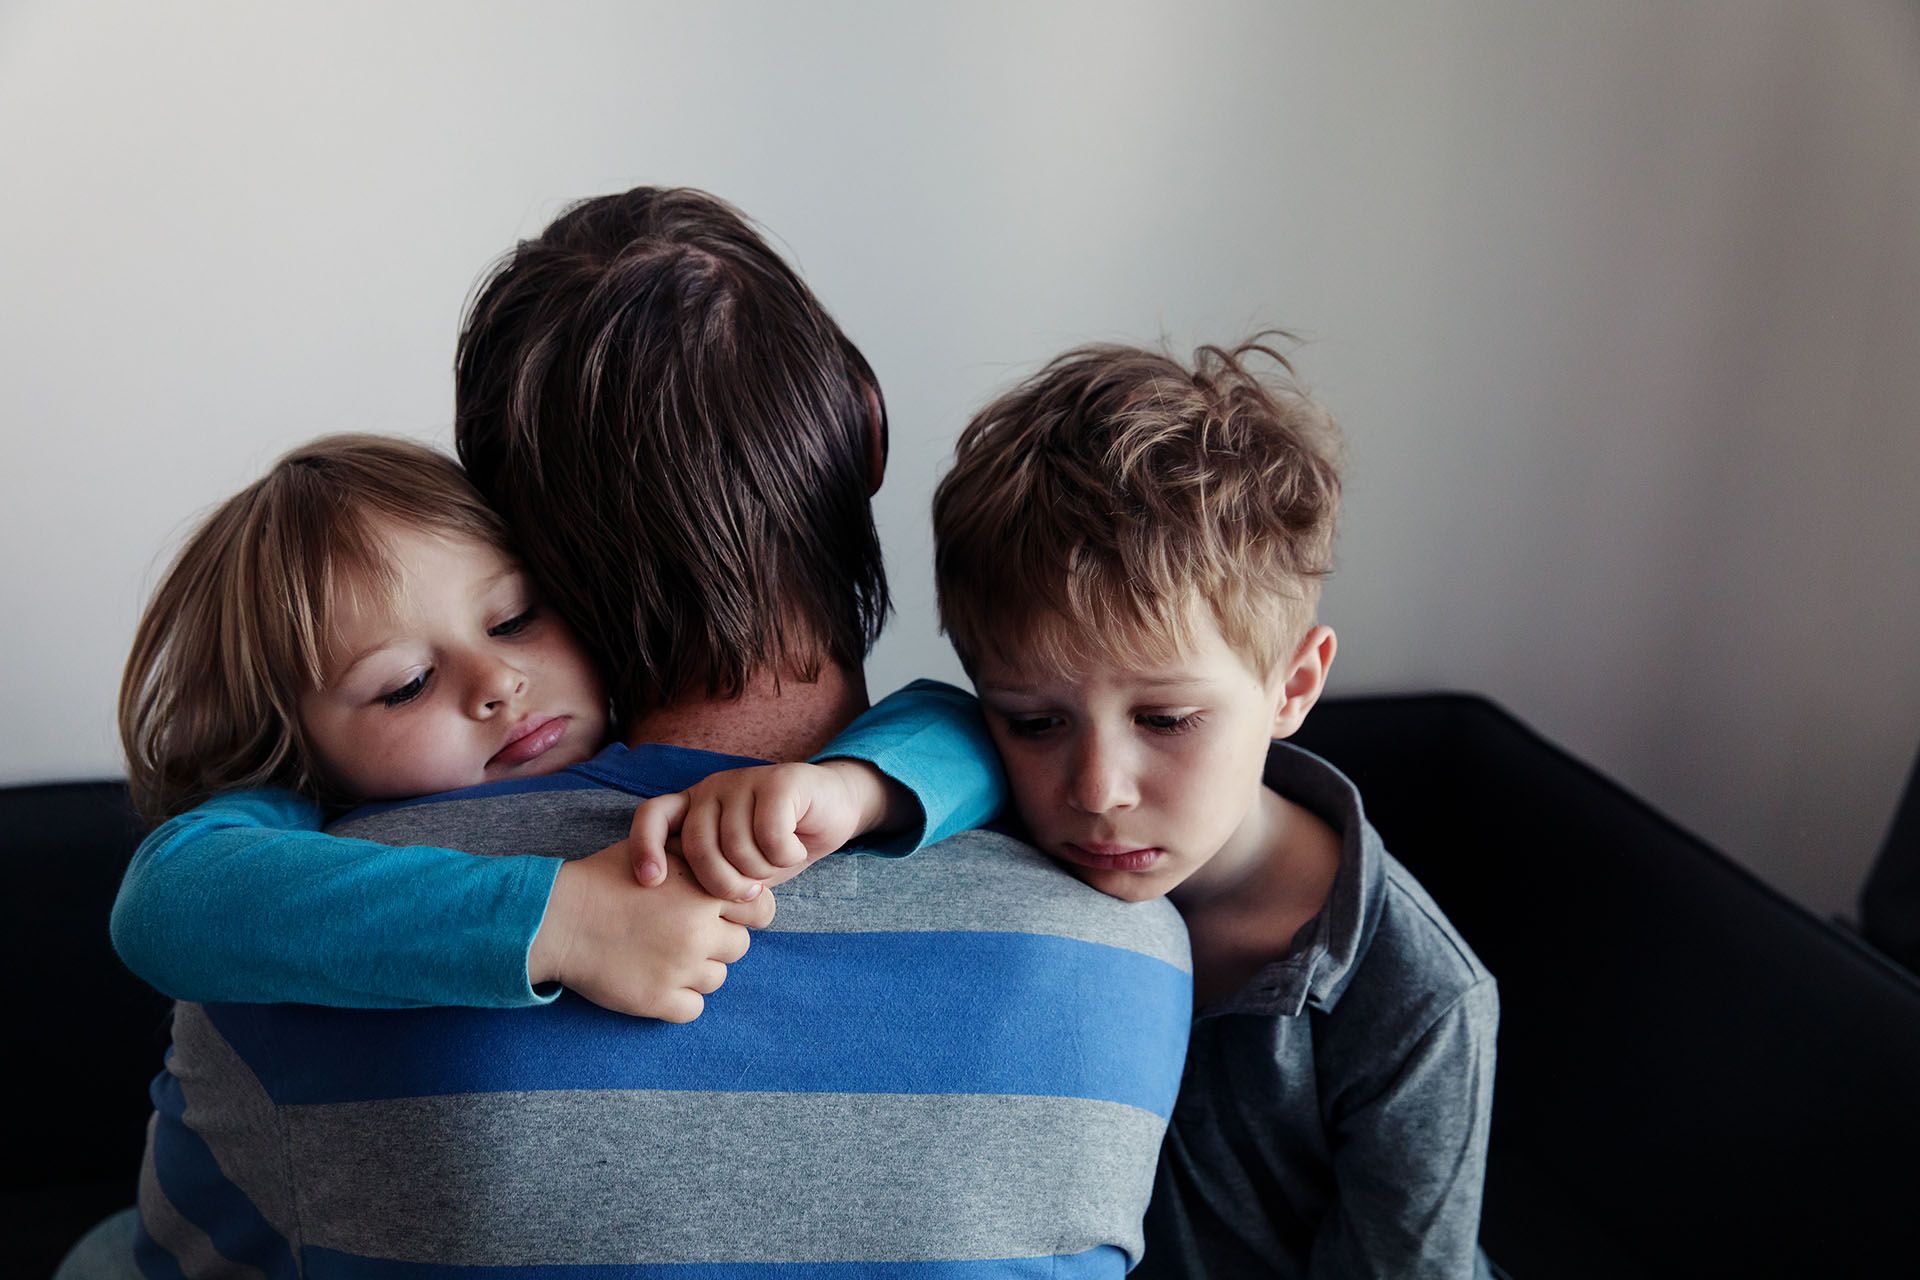 Children & Grief. How to help a child in grief